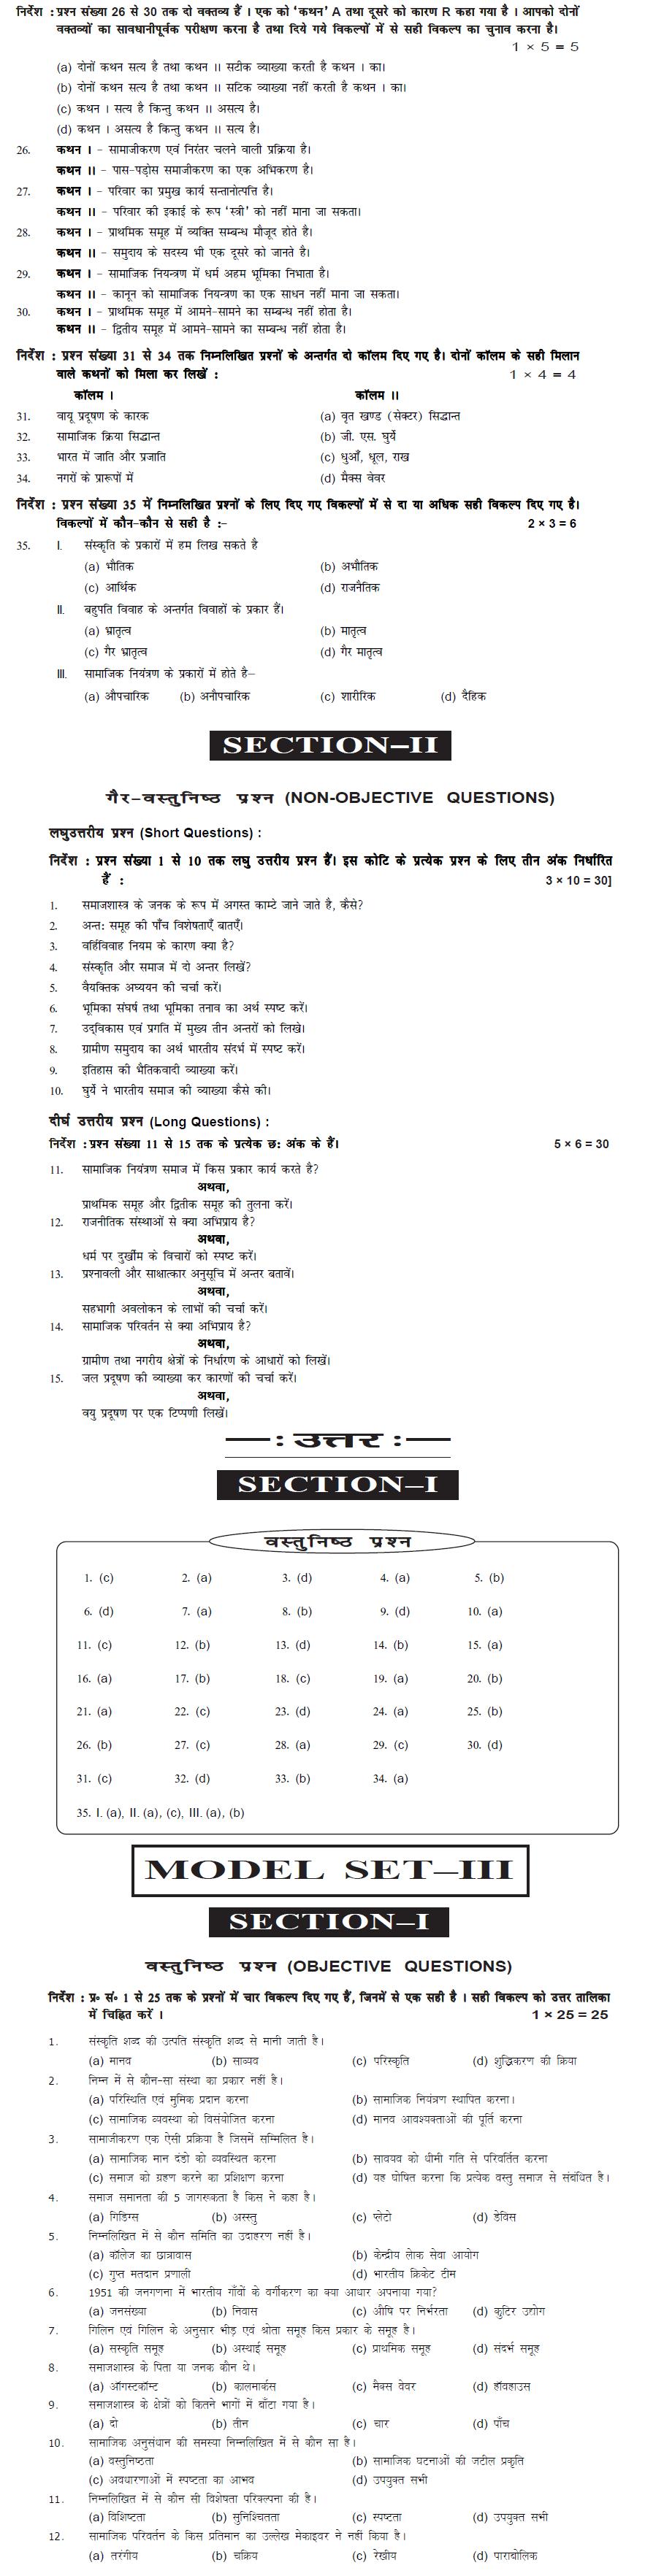 Bihar Board Class XI Arts Model Question Papers - Sociology